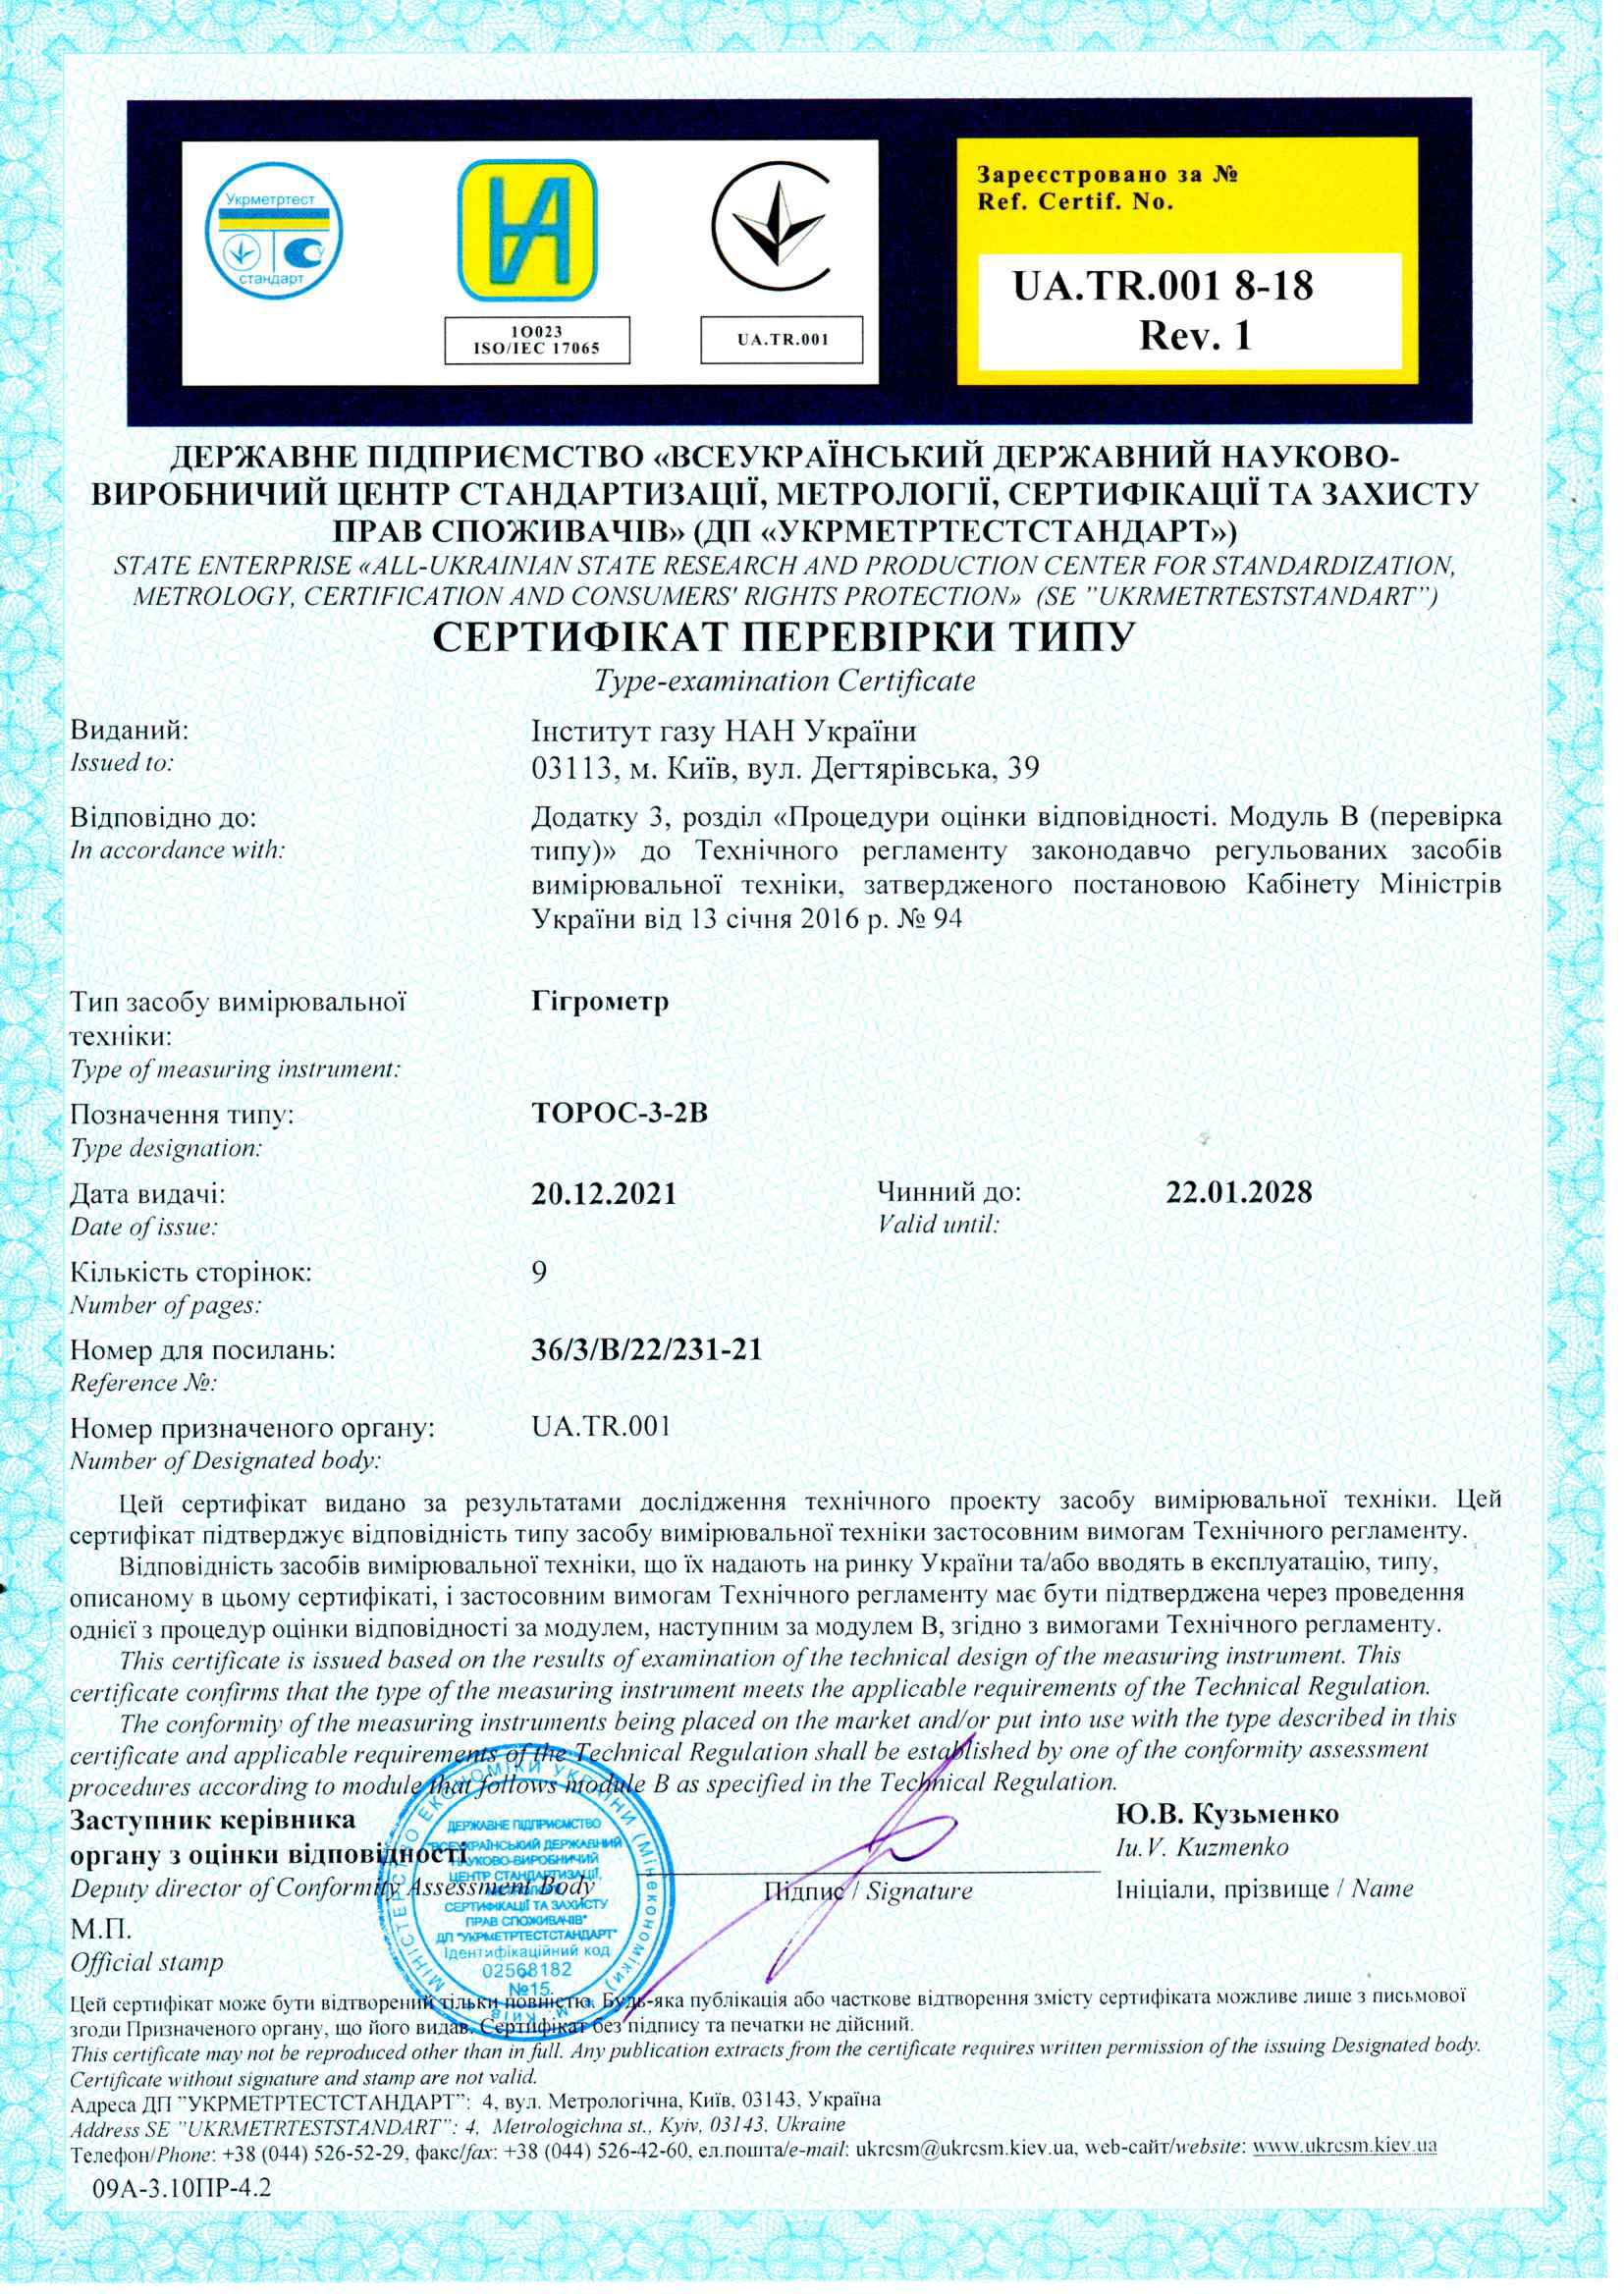 Сертификат проверки типа гигрометр ТОРОС-3-2В